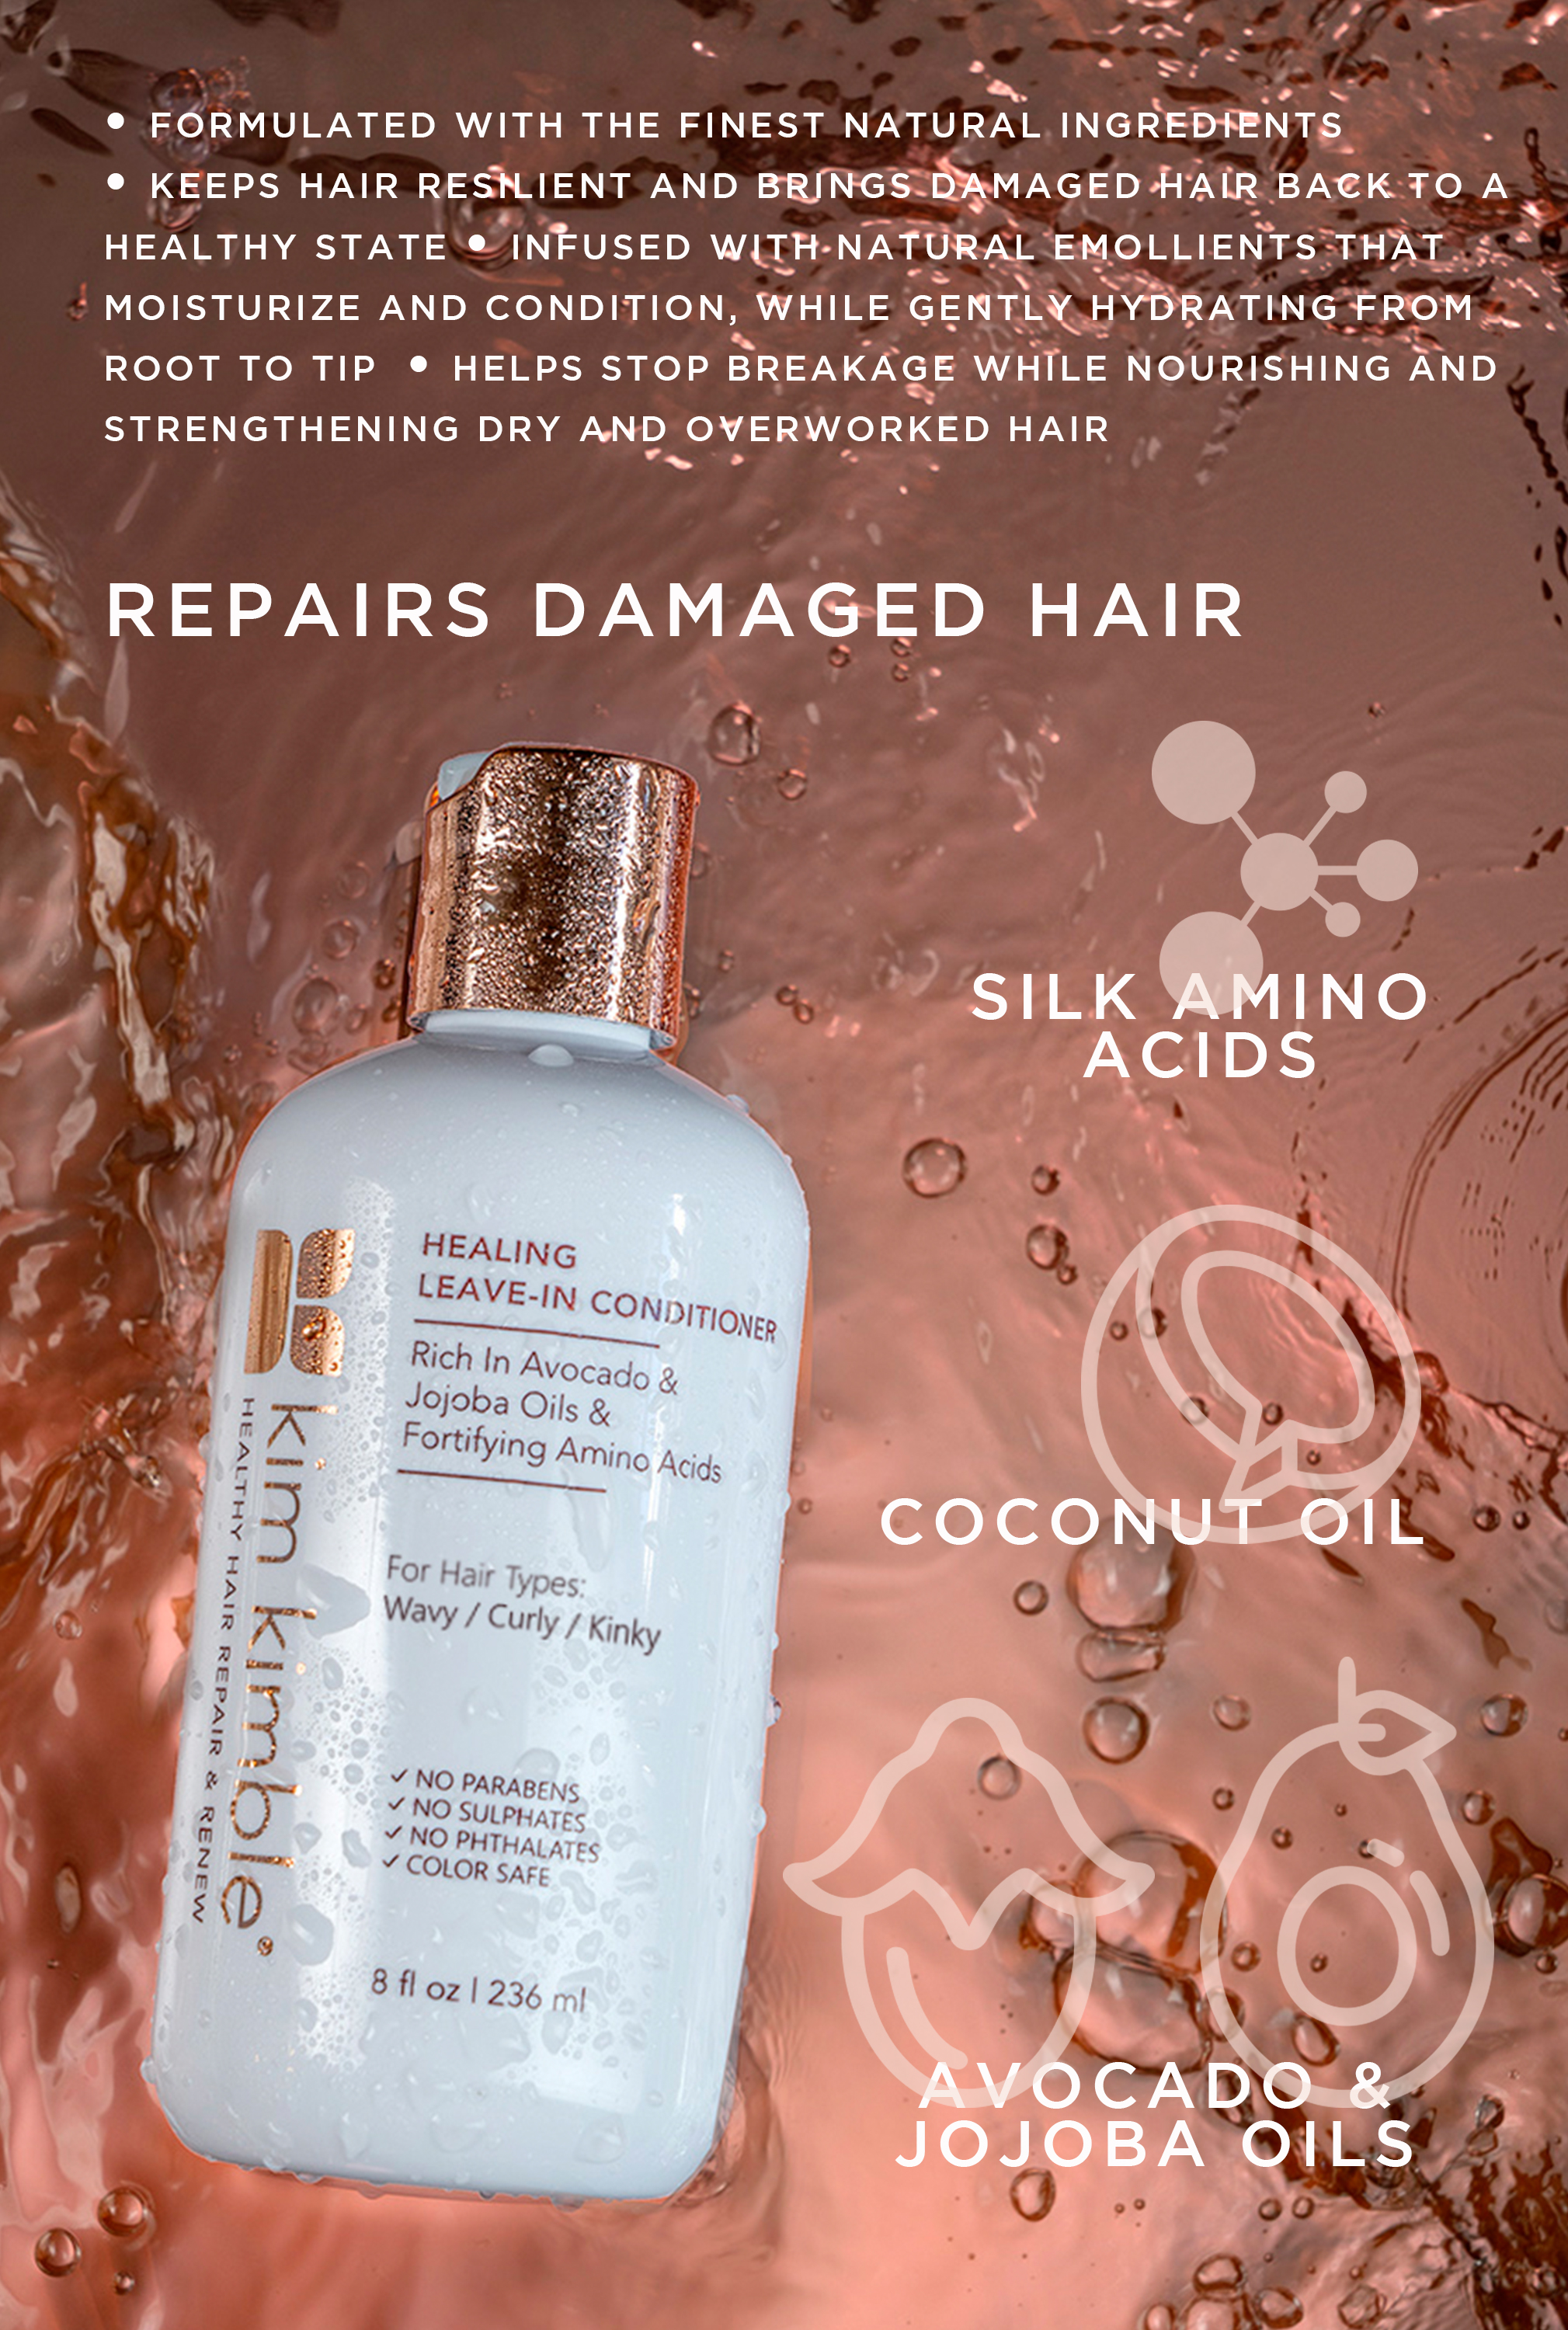 Kim Kimble Healthy Hair Repair & Renew Color Protection Grow/Heal Leave-in Conditioner with Avacado, Jojoba Oil & Amino Acids, 8 fl oz - image 8 of 8